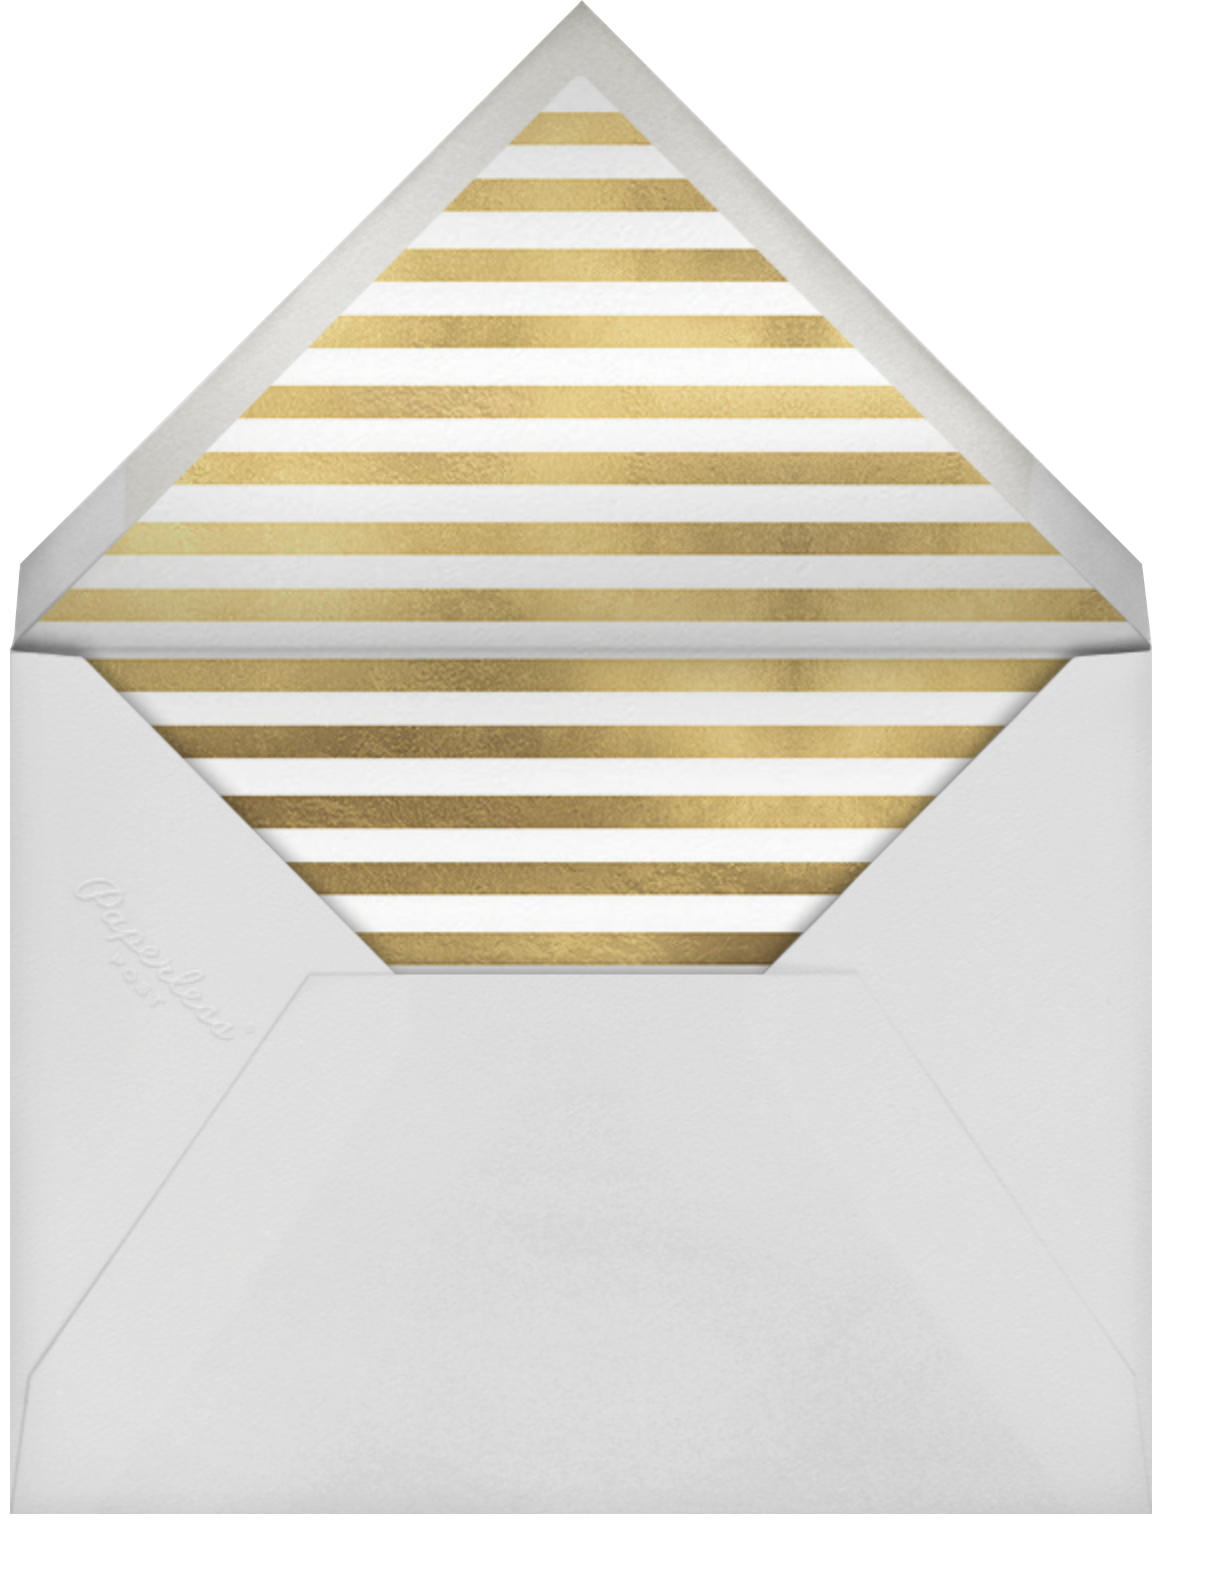 Tassel (Photo) - Gold - kate spade new york - Envelope